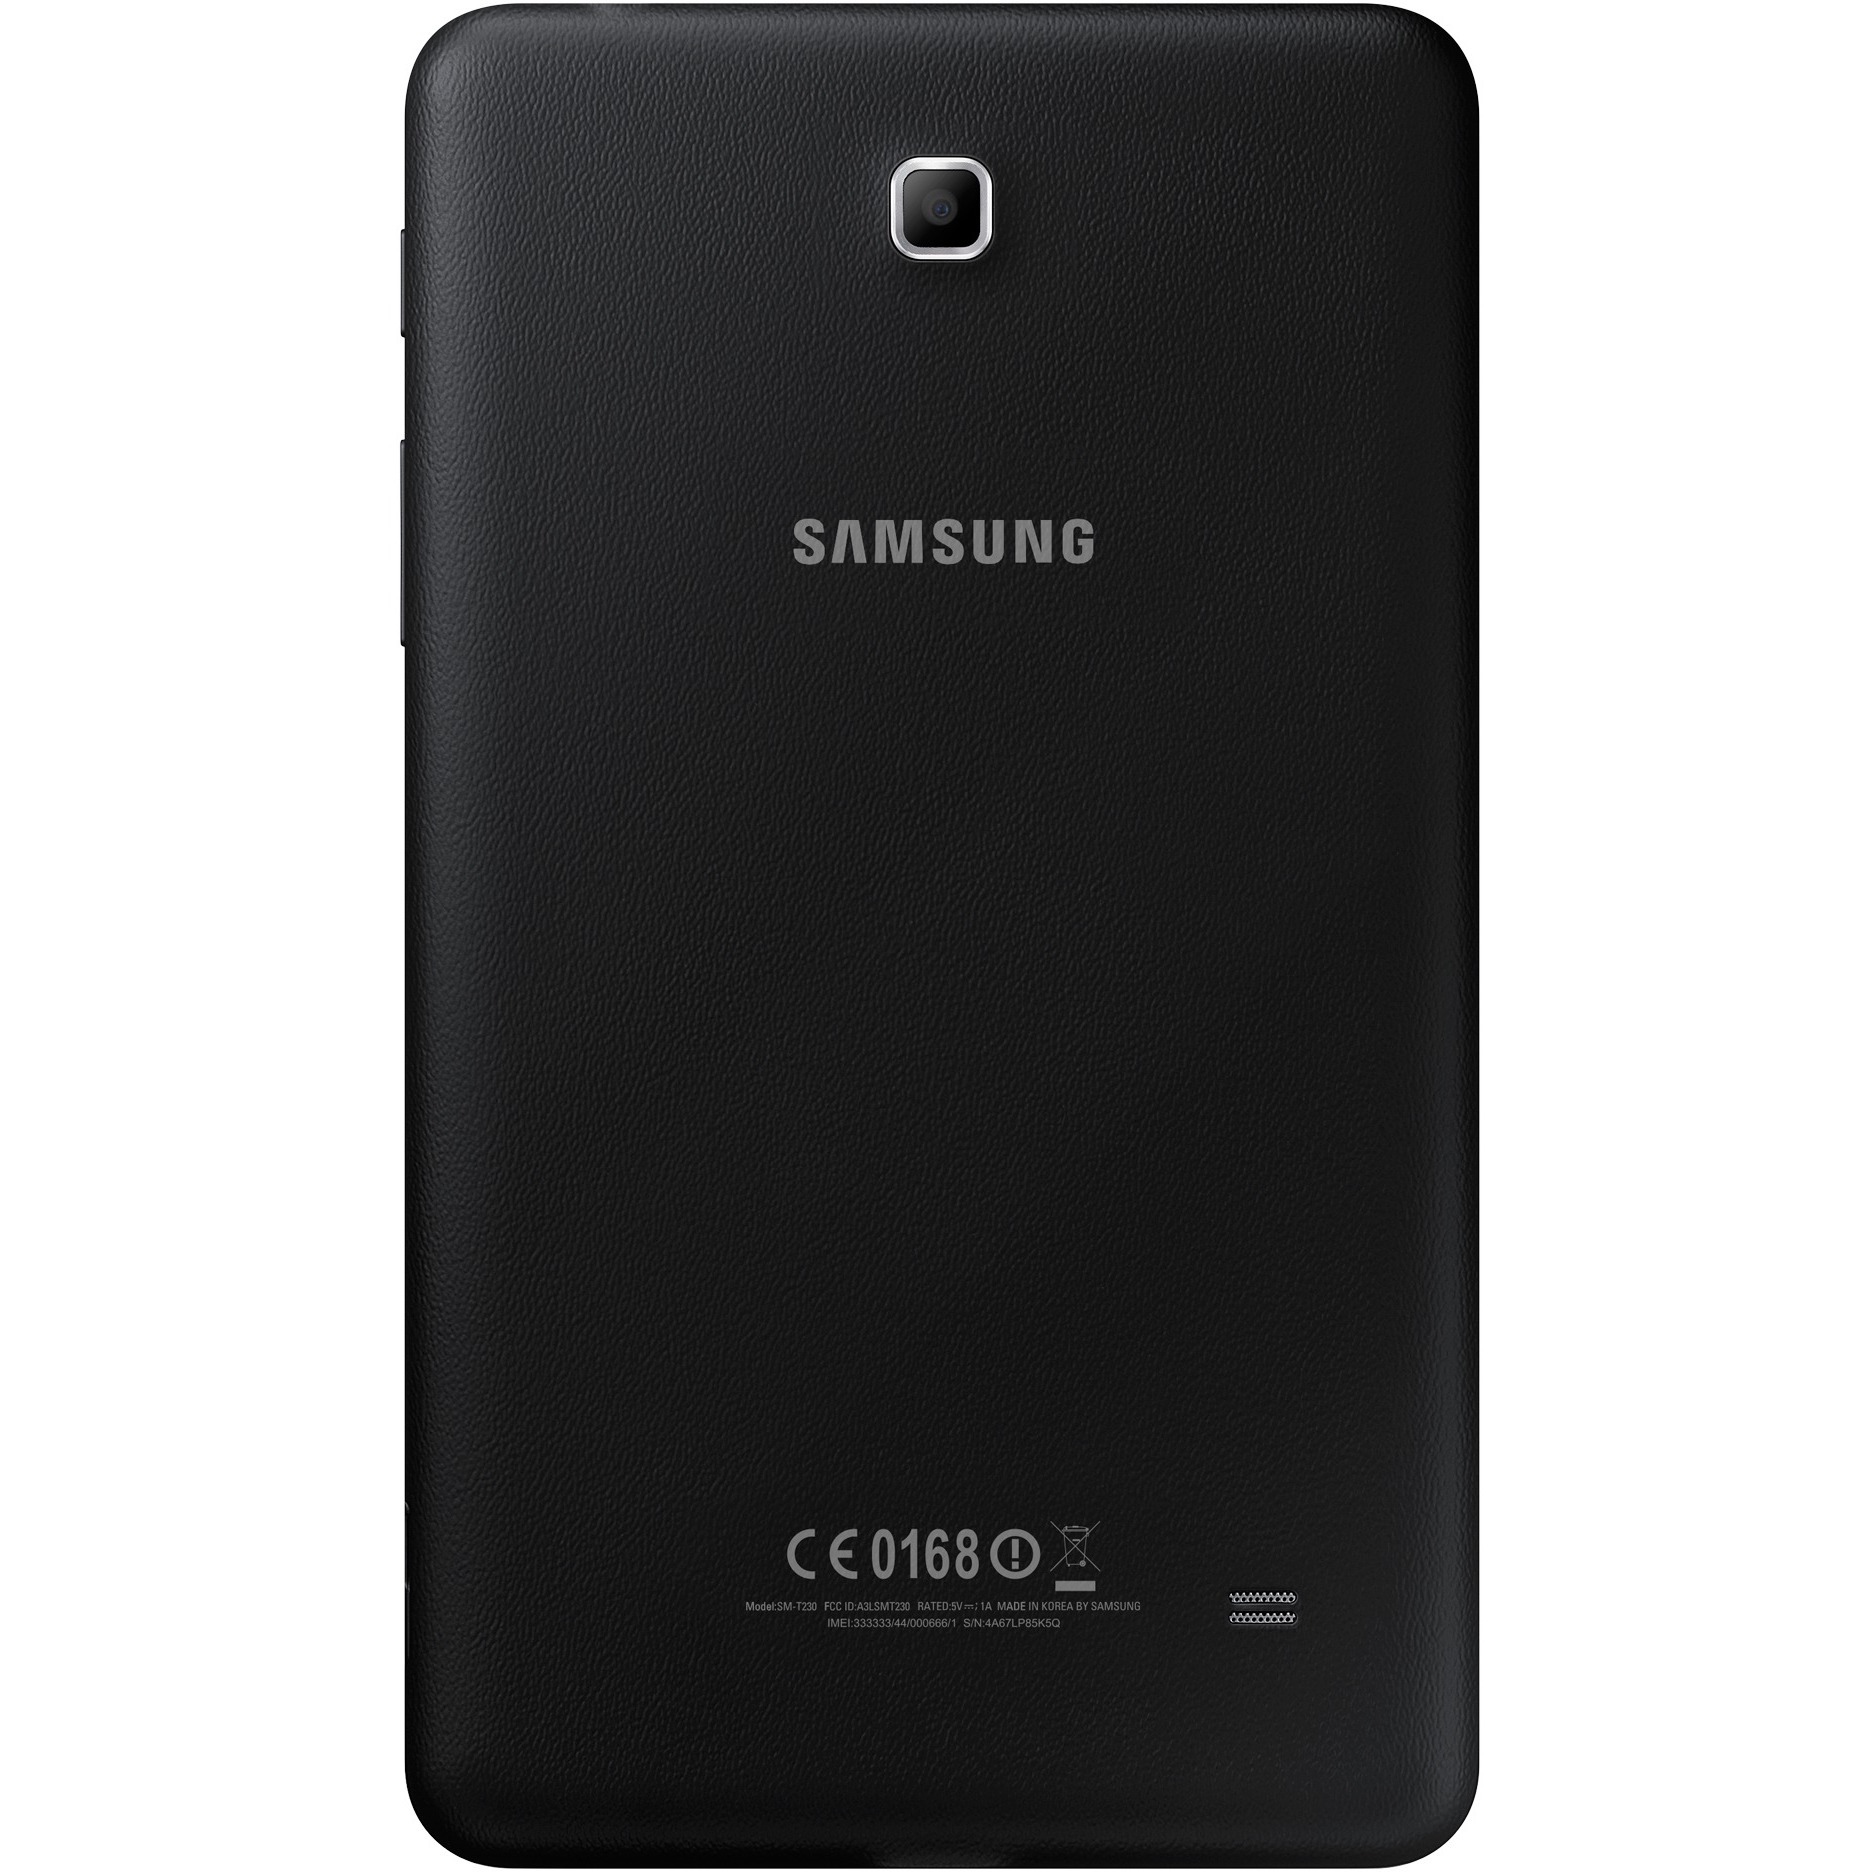 168 4 6. Samsung Galaxy Tab 4. Планшет Samsung Galaxy Tab 4 7.0. Samsung Galaxy Tab SM t230. Планшет самсунг галакси таб 4.